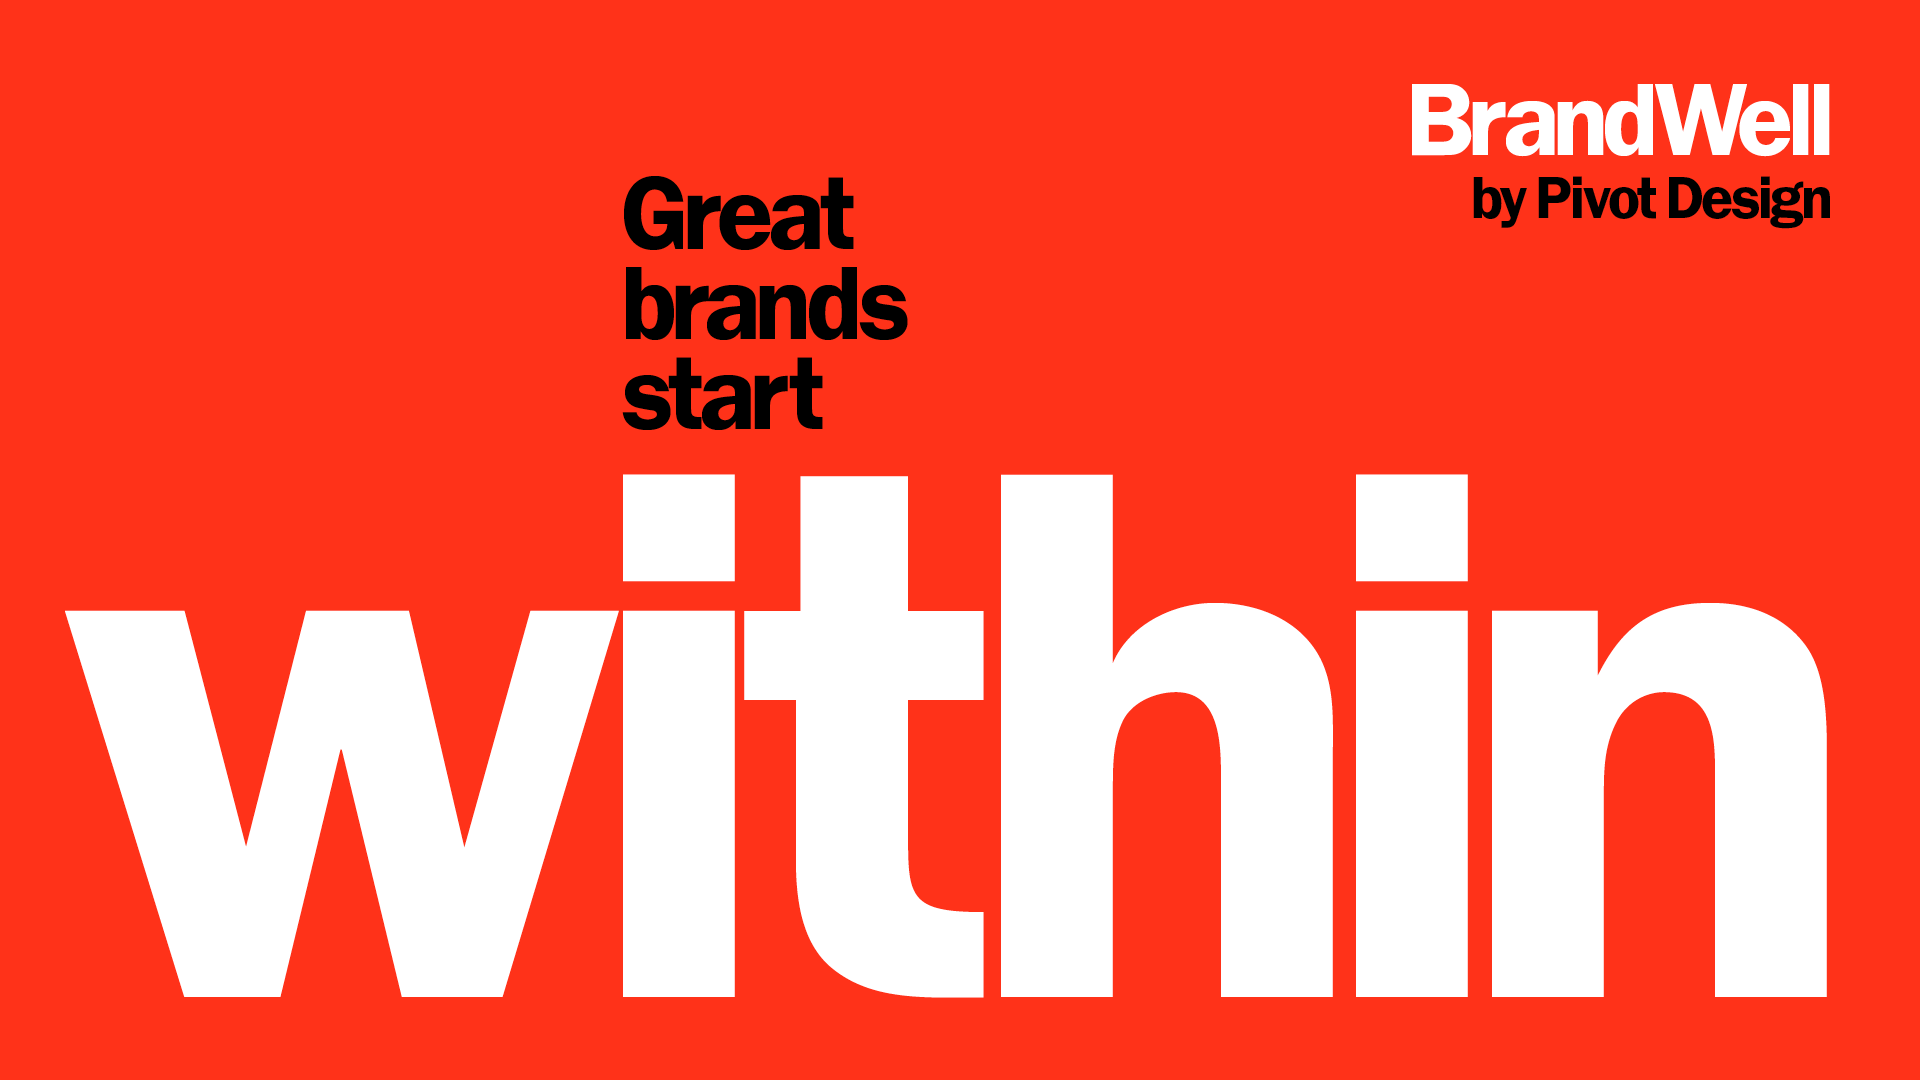 Great brands start within. BrandWell by Pivot Design.